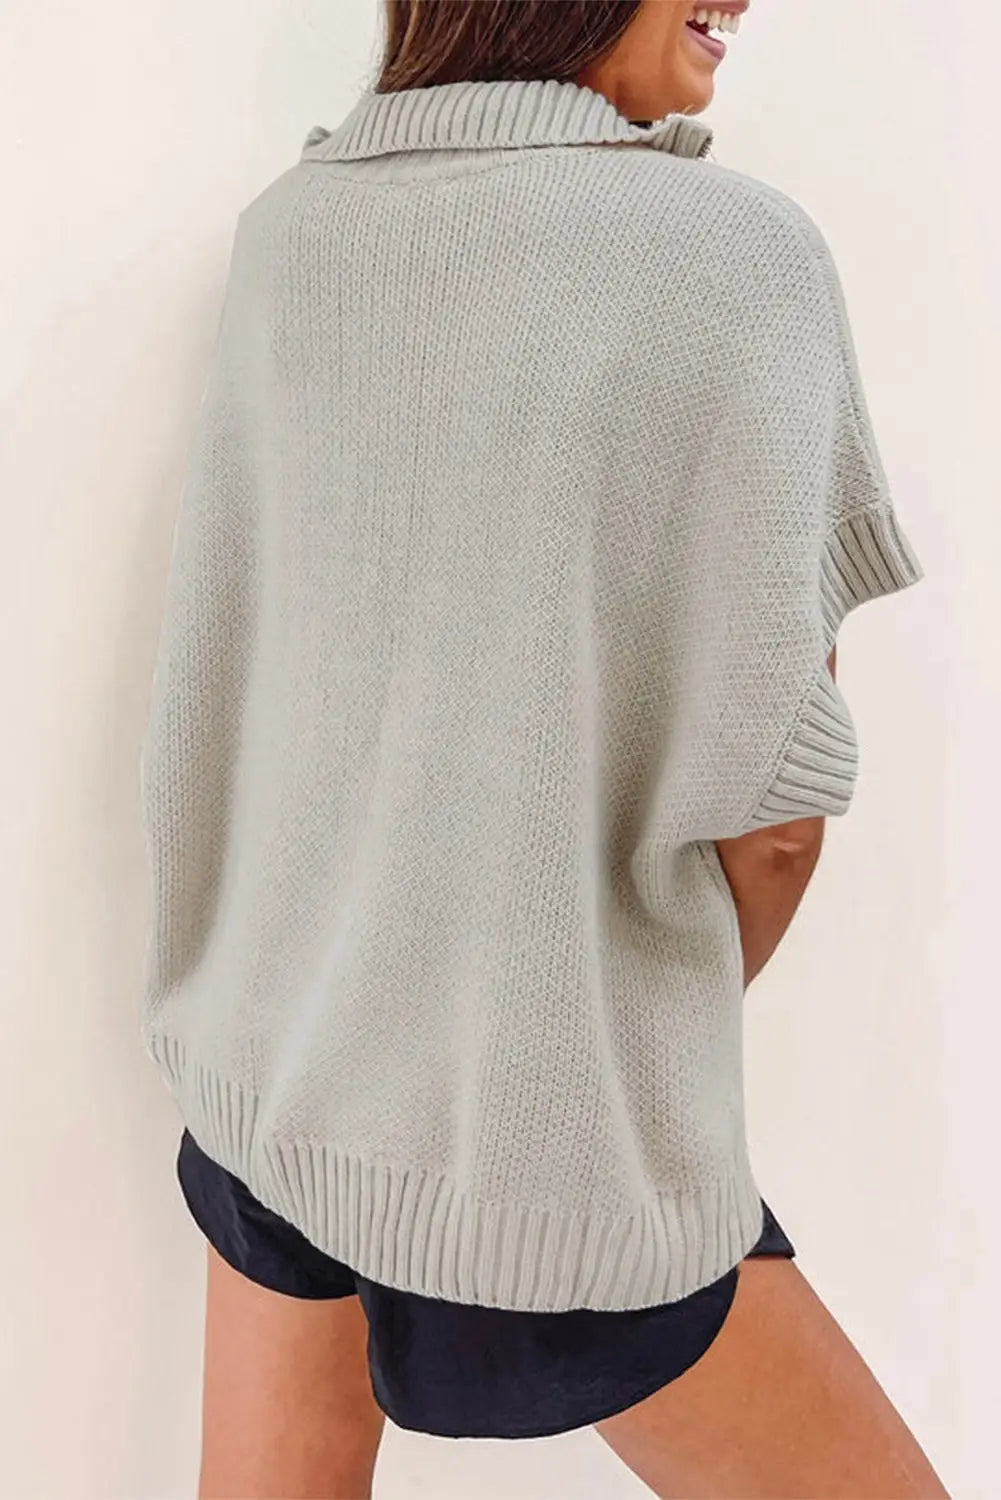 Black quarter zip short batwing sleeve sweater - sweaters & cardigans